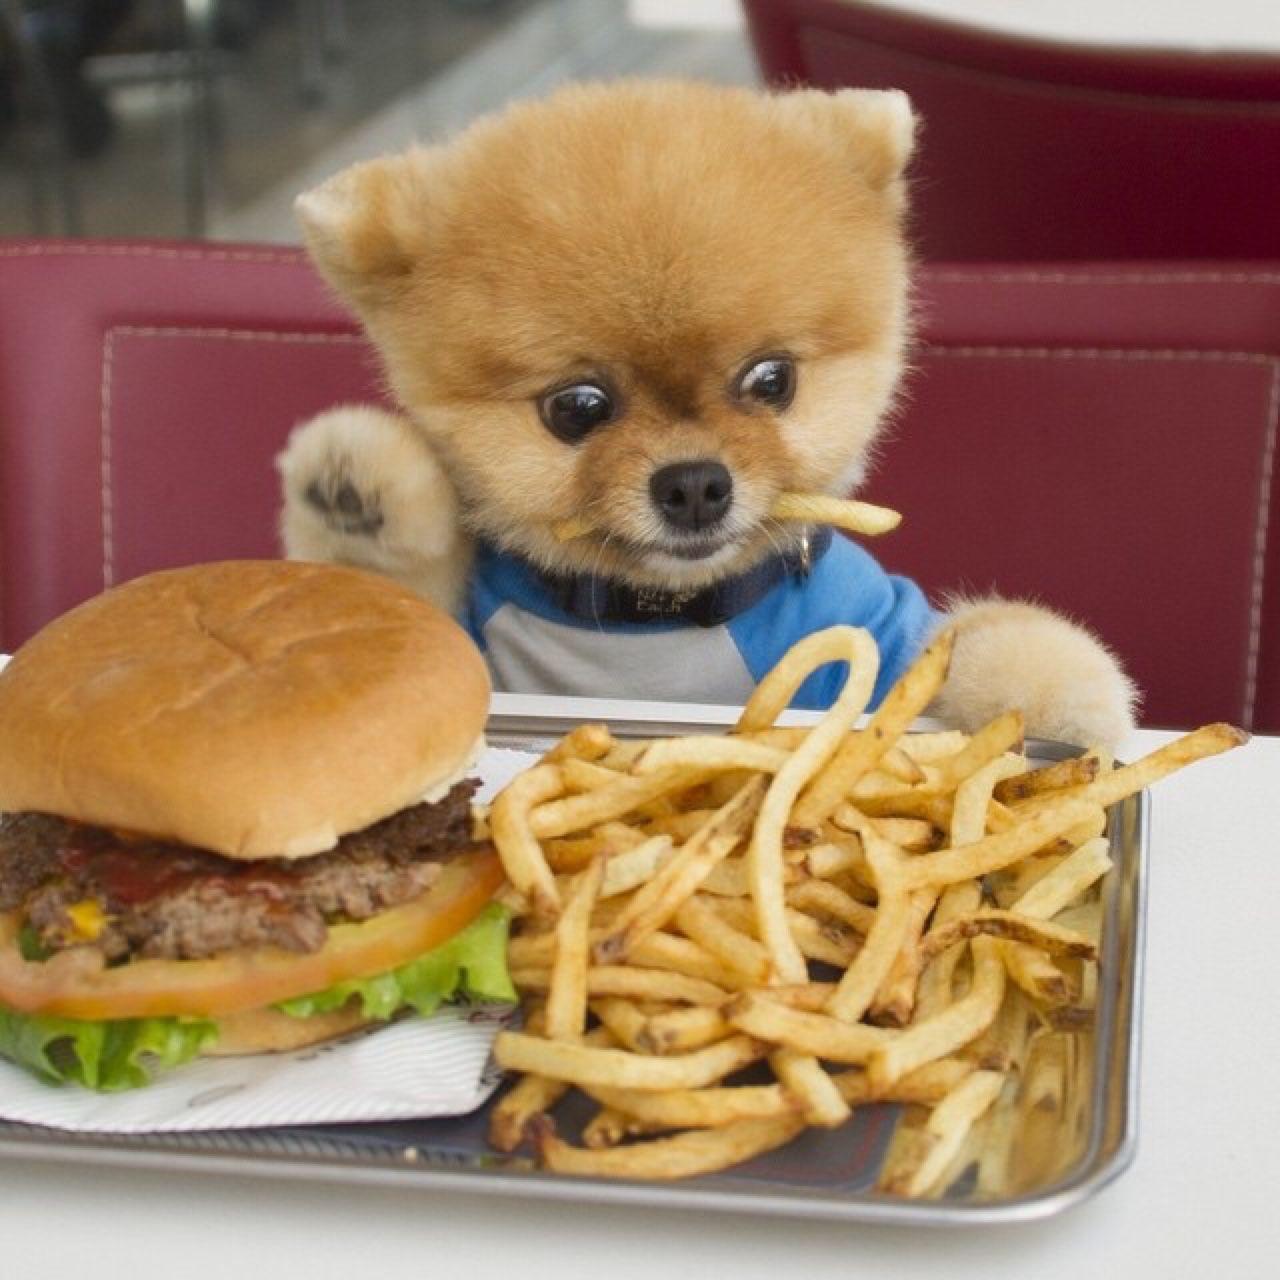 It's burger day for Jiff the Pomeranian. Pomeranian